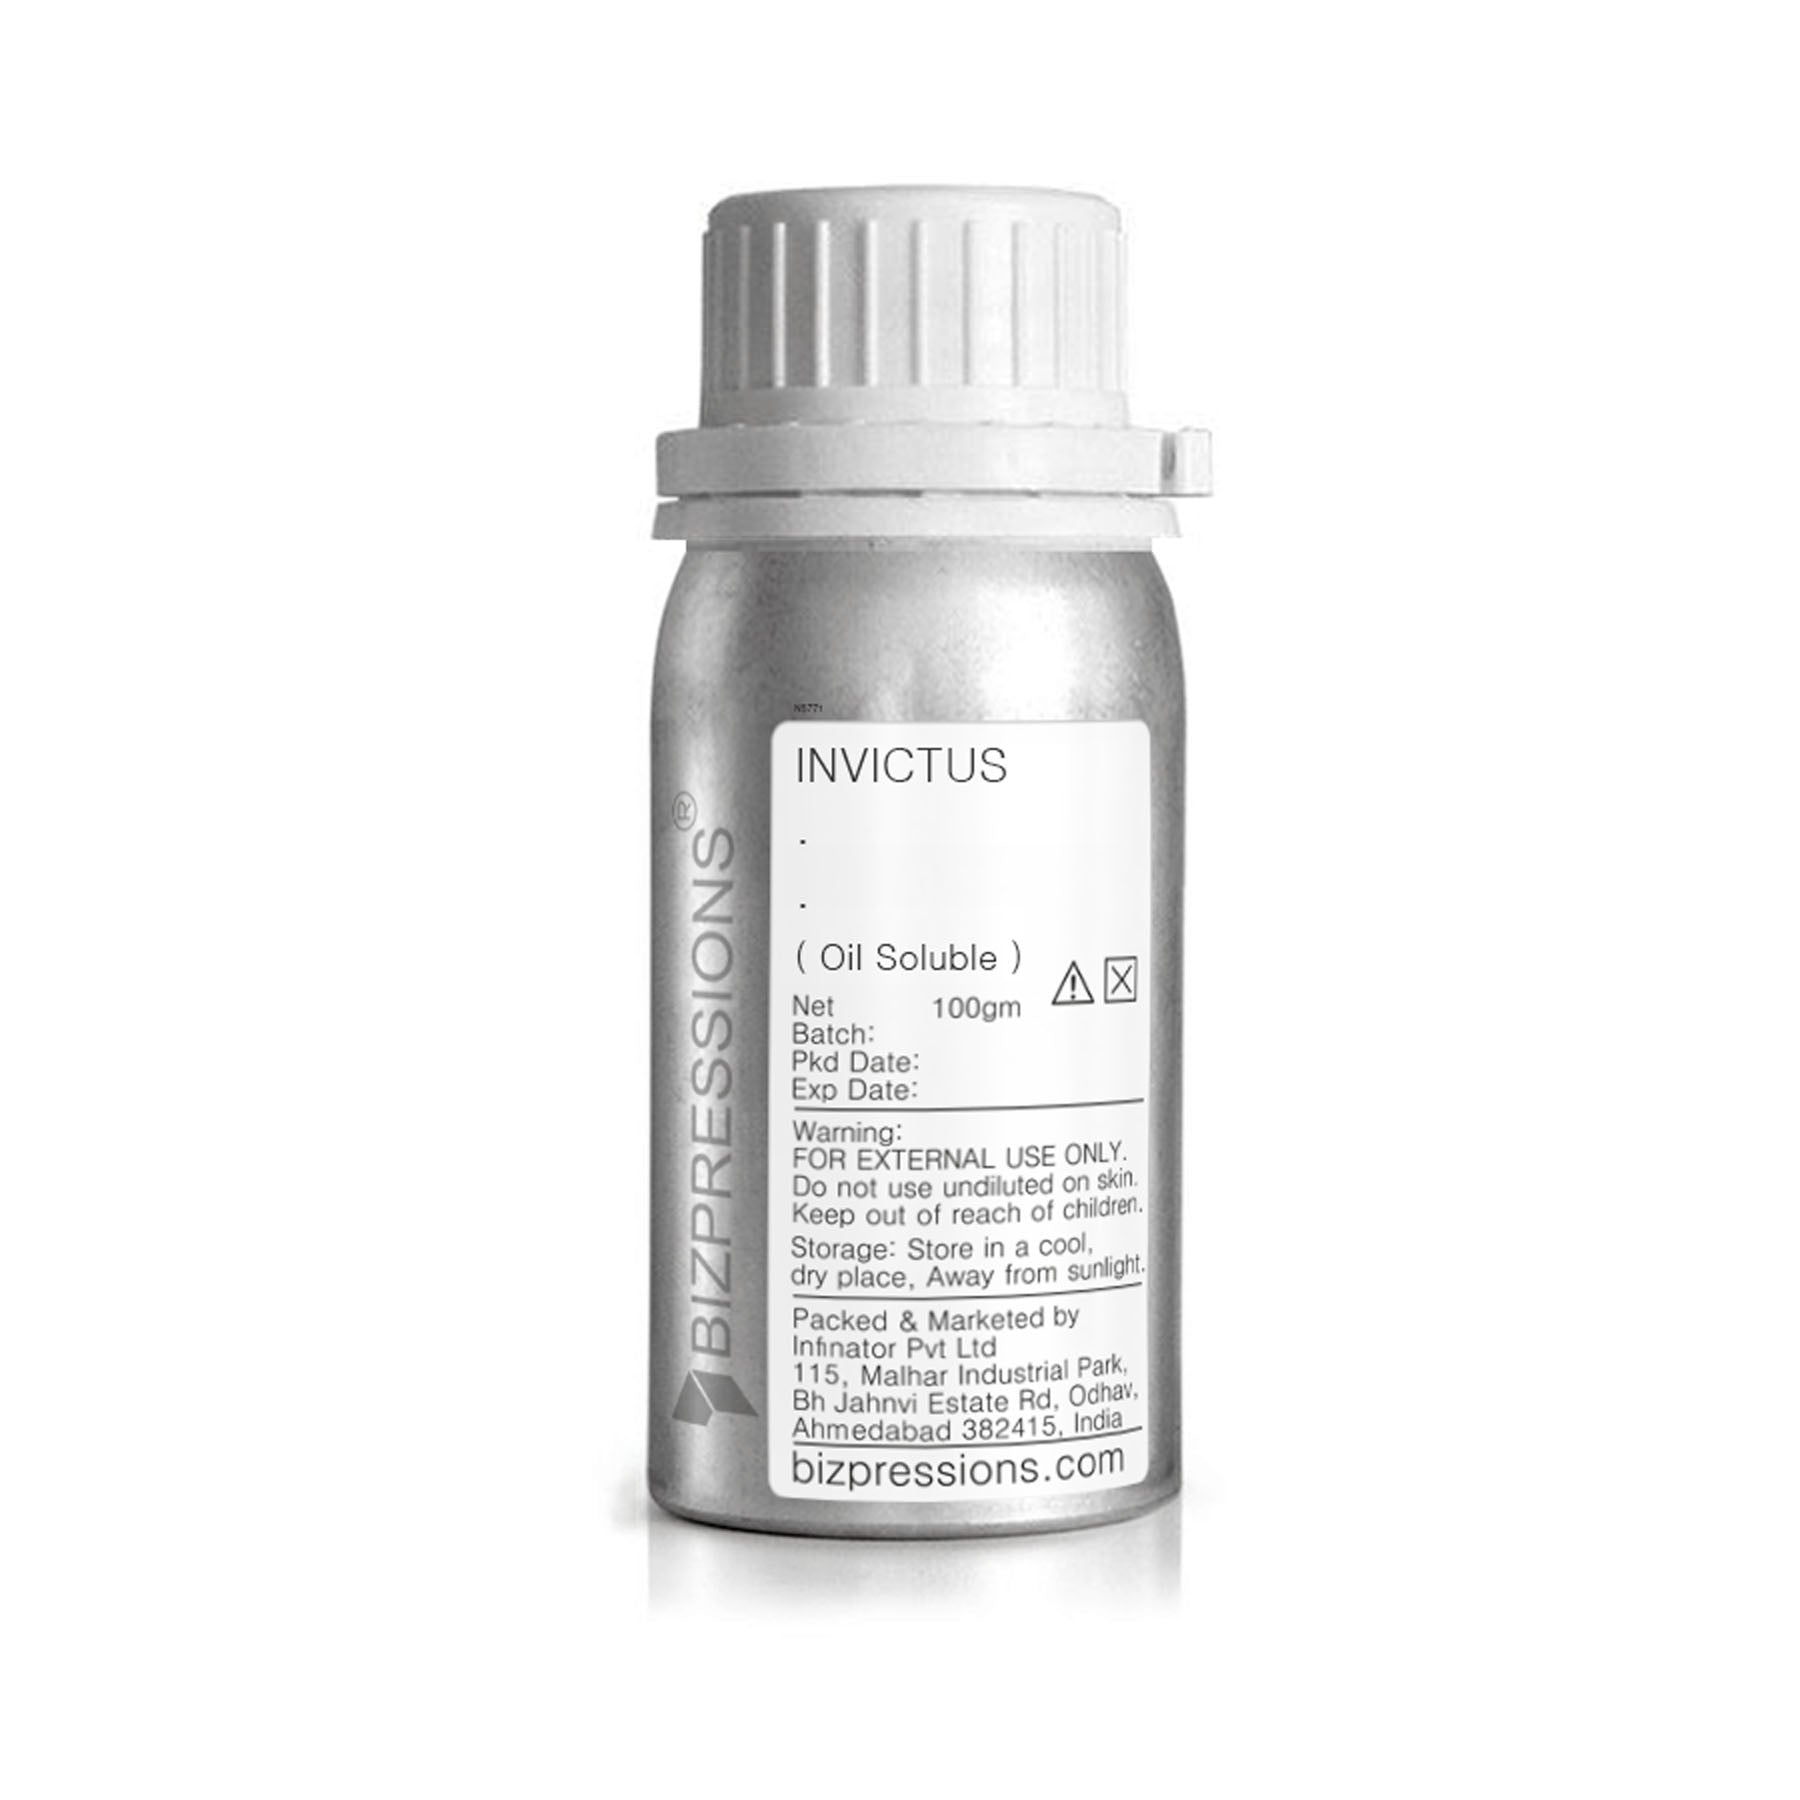 INVICTUS - Fragrance ( Oil Soluble ) - 100 gm